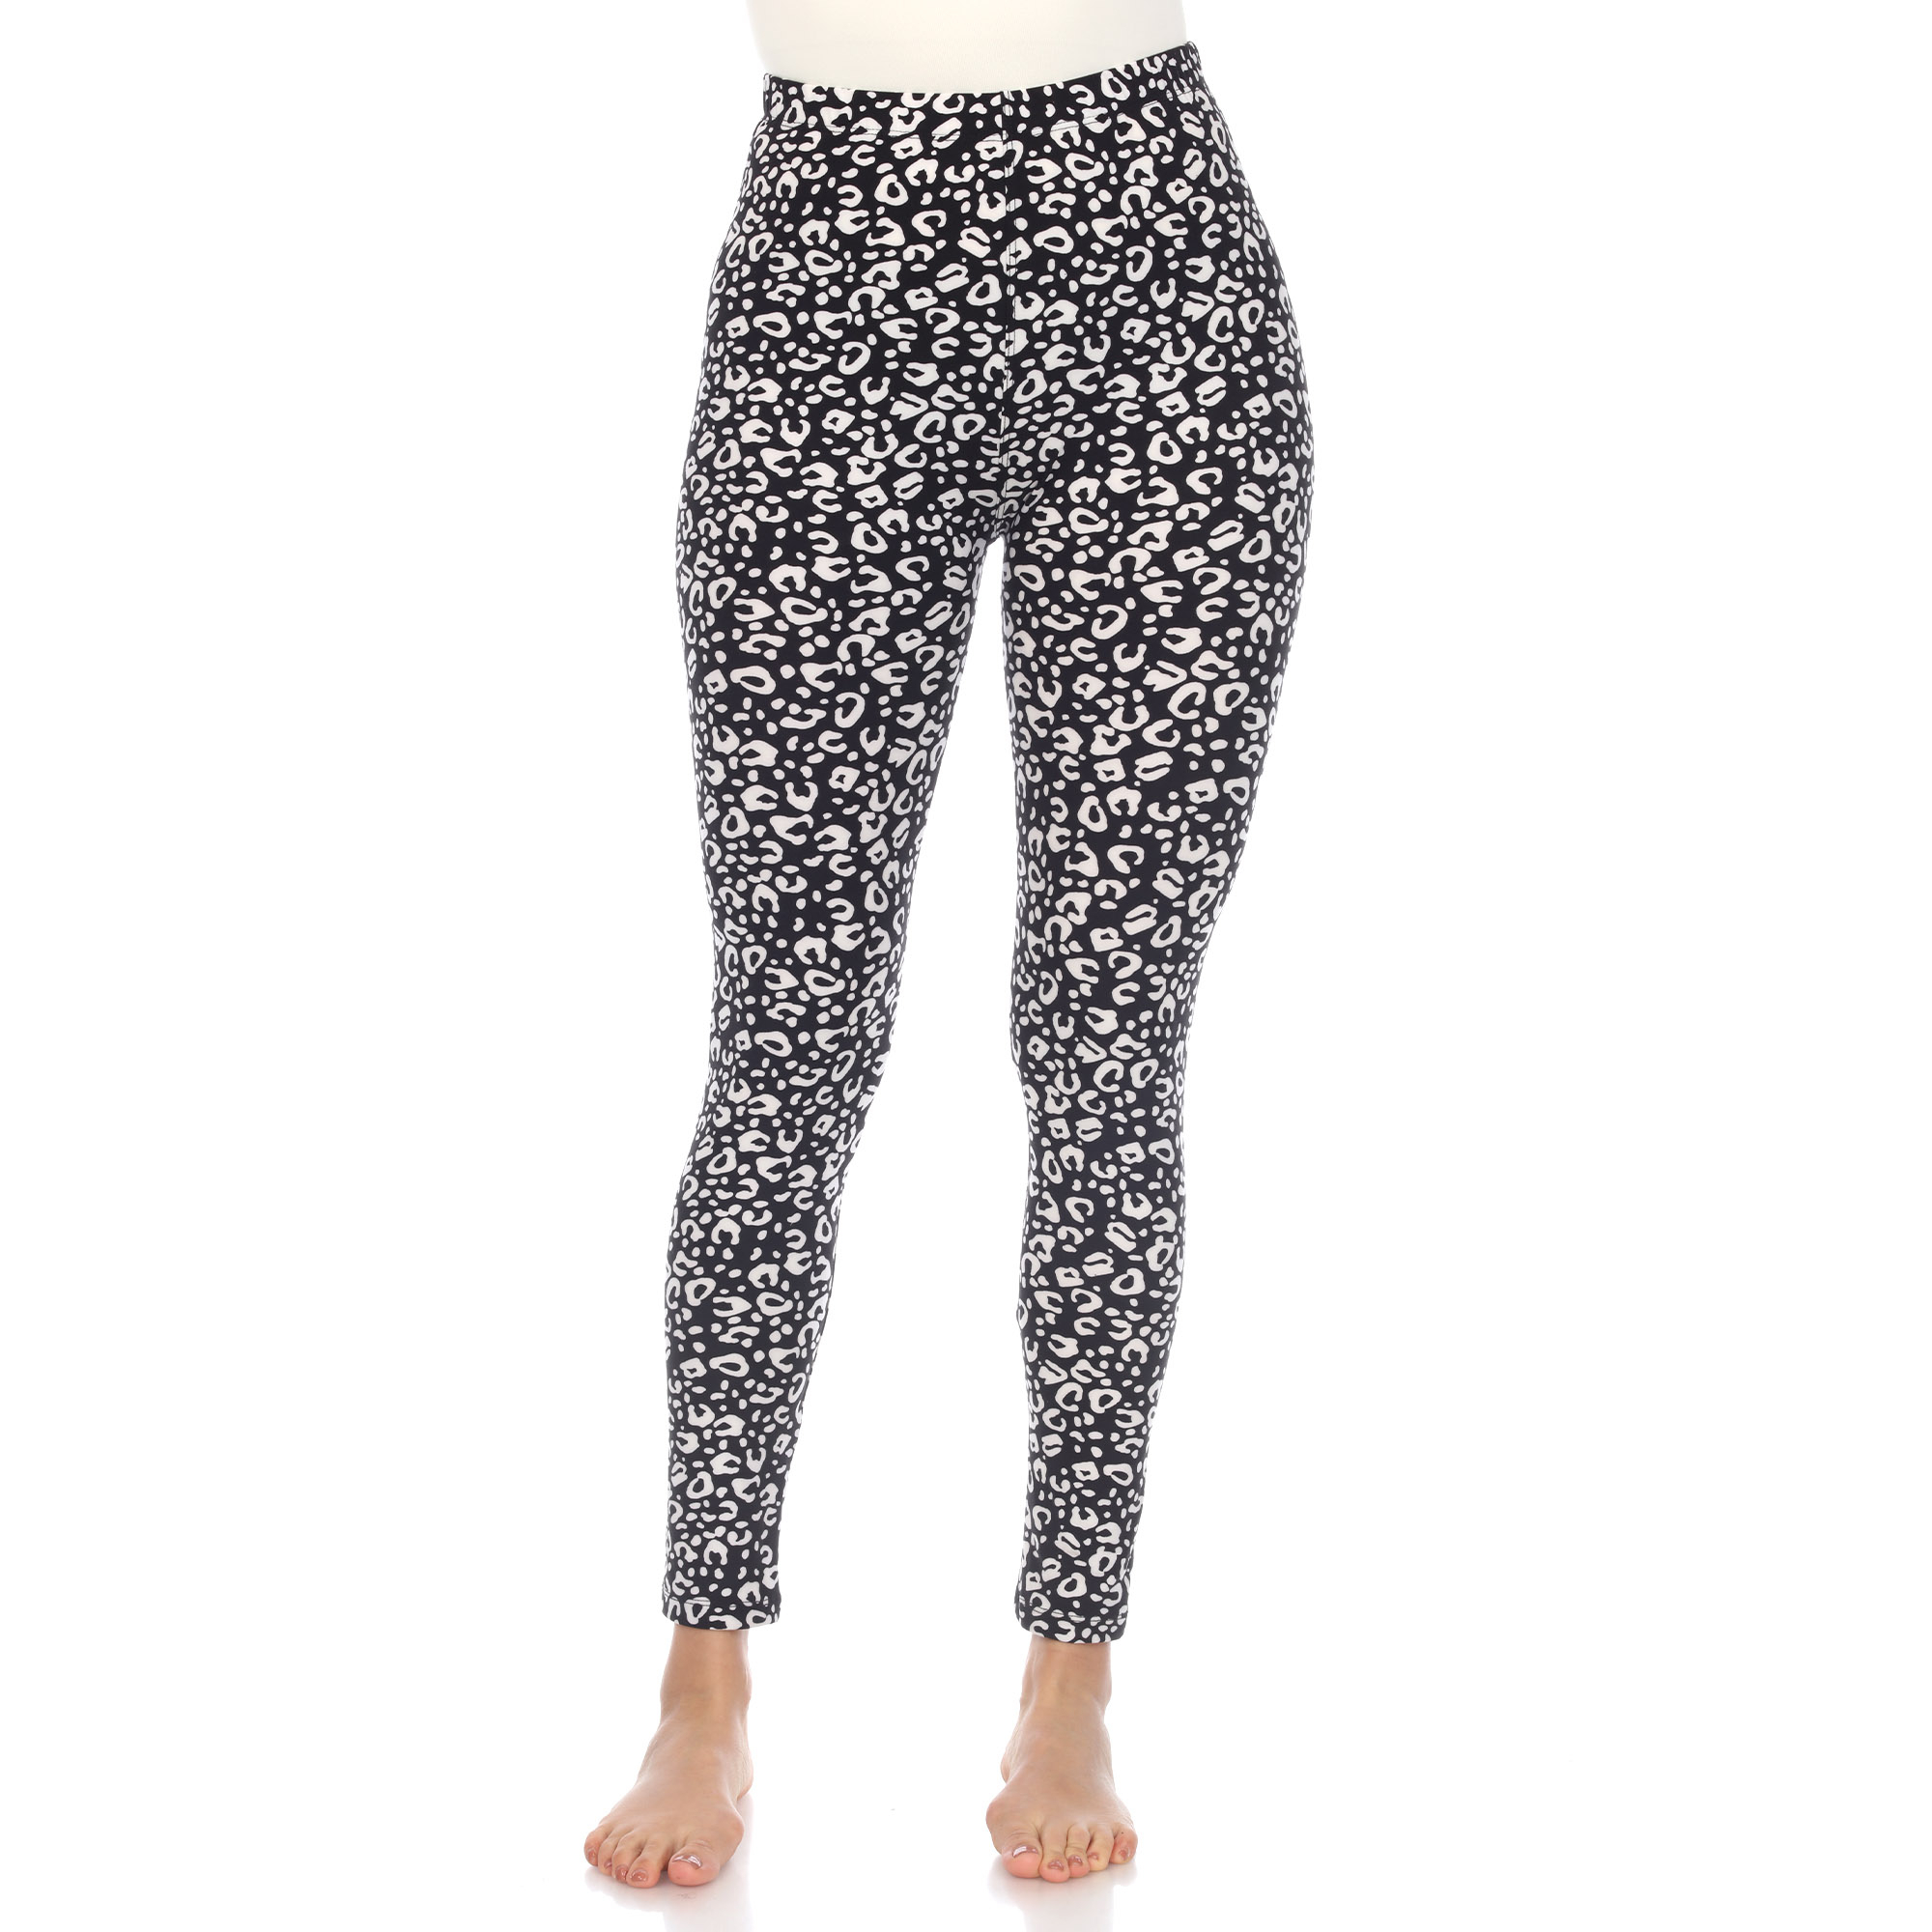 White Mark Women's Leopard Print Stretch Leggings - Fuchsia, One Size